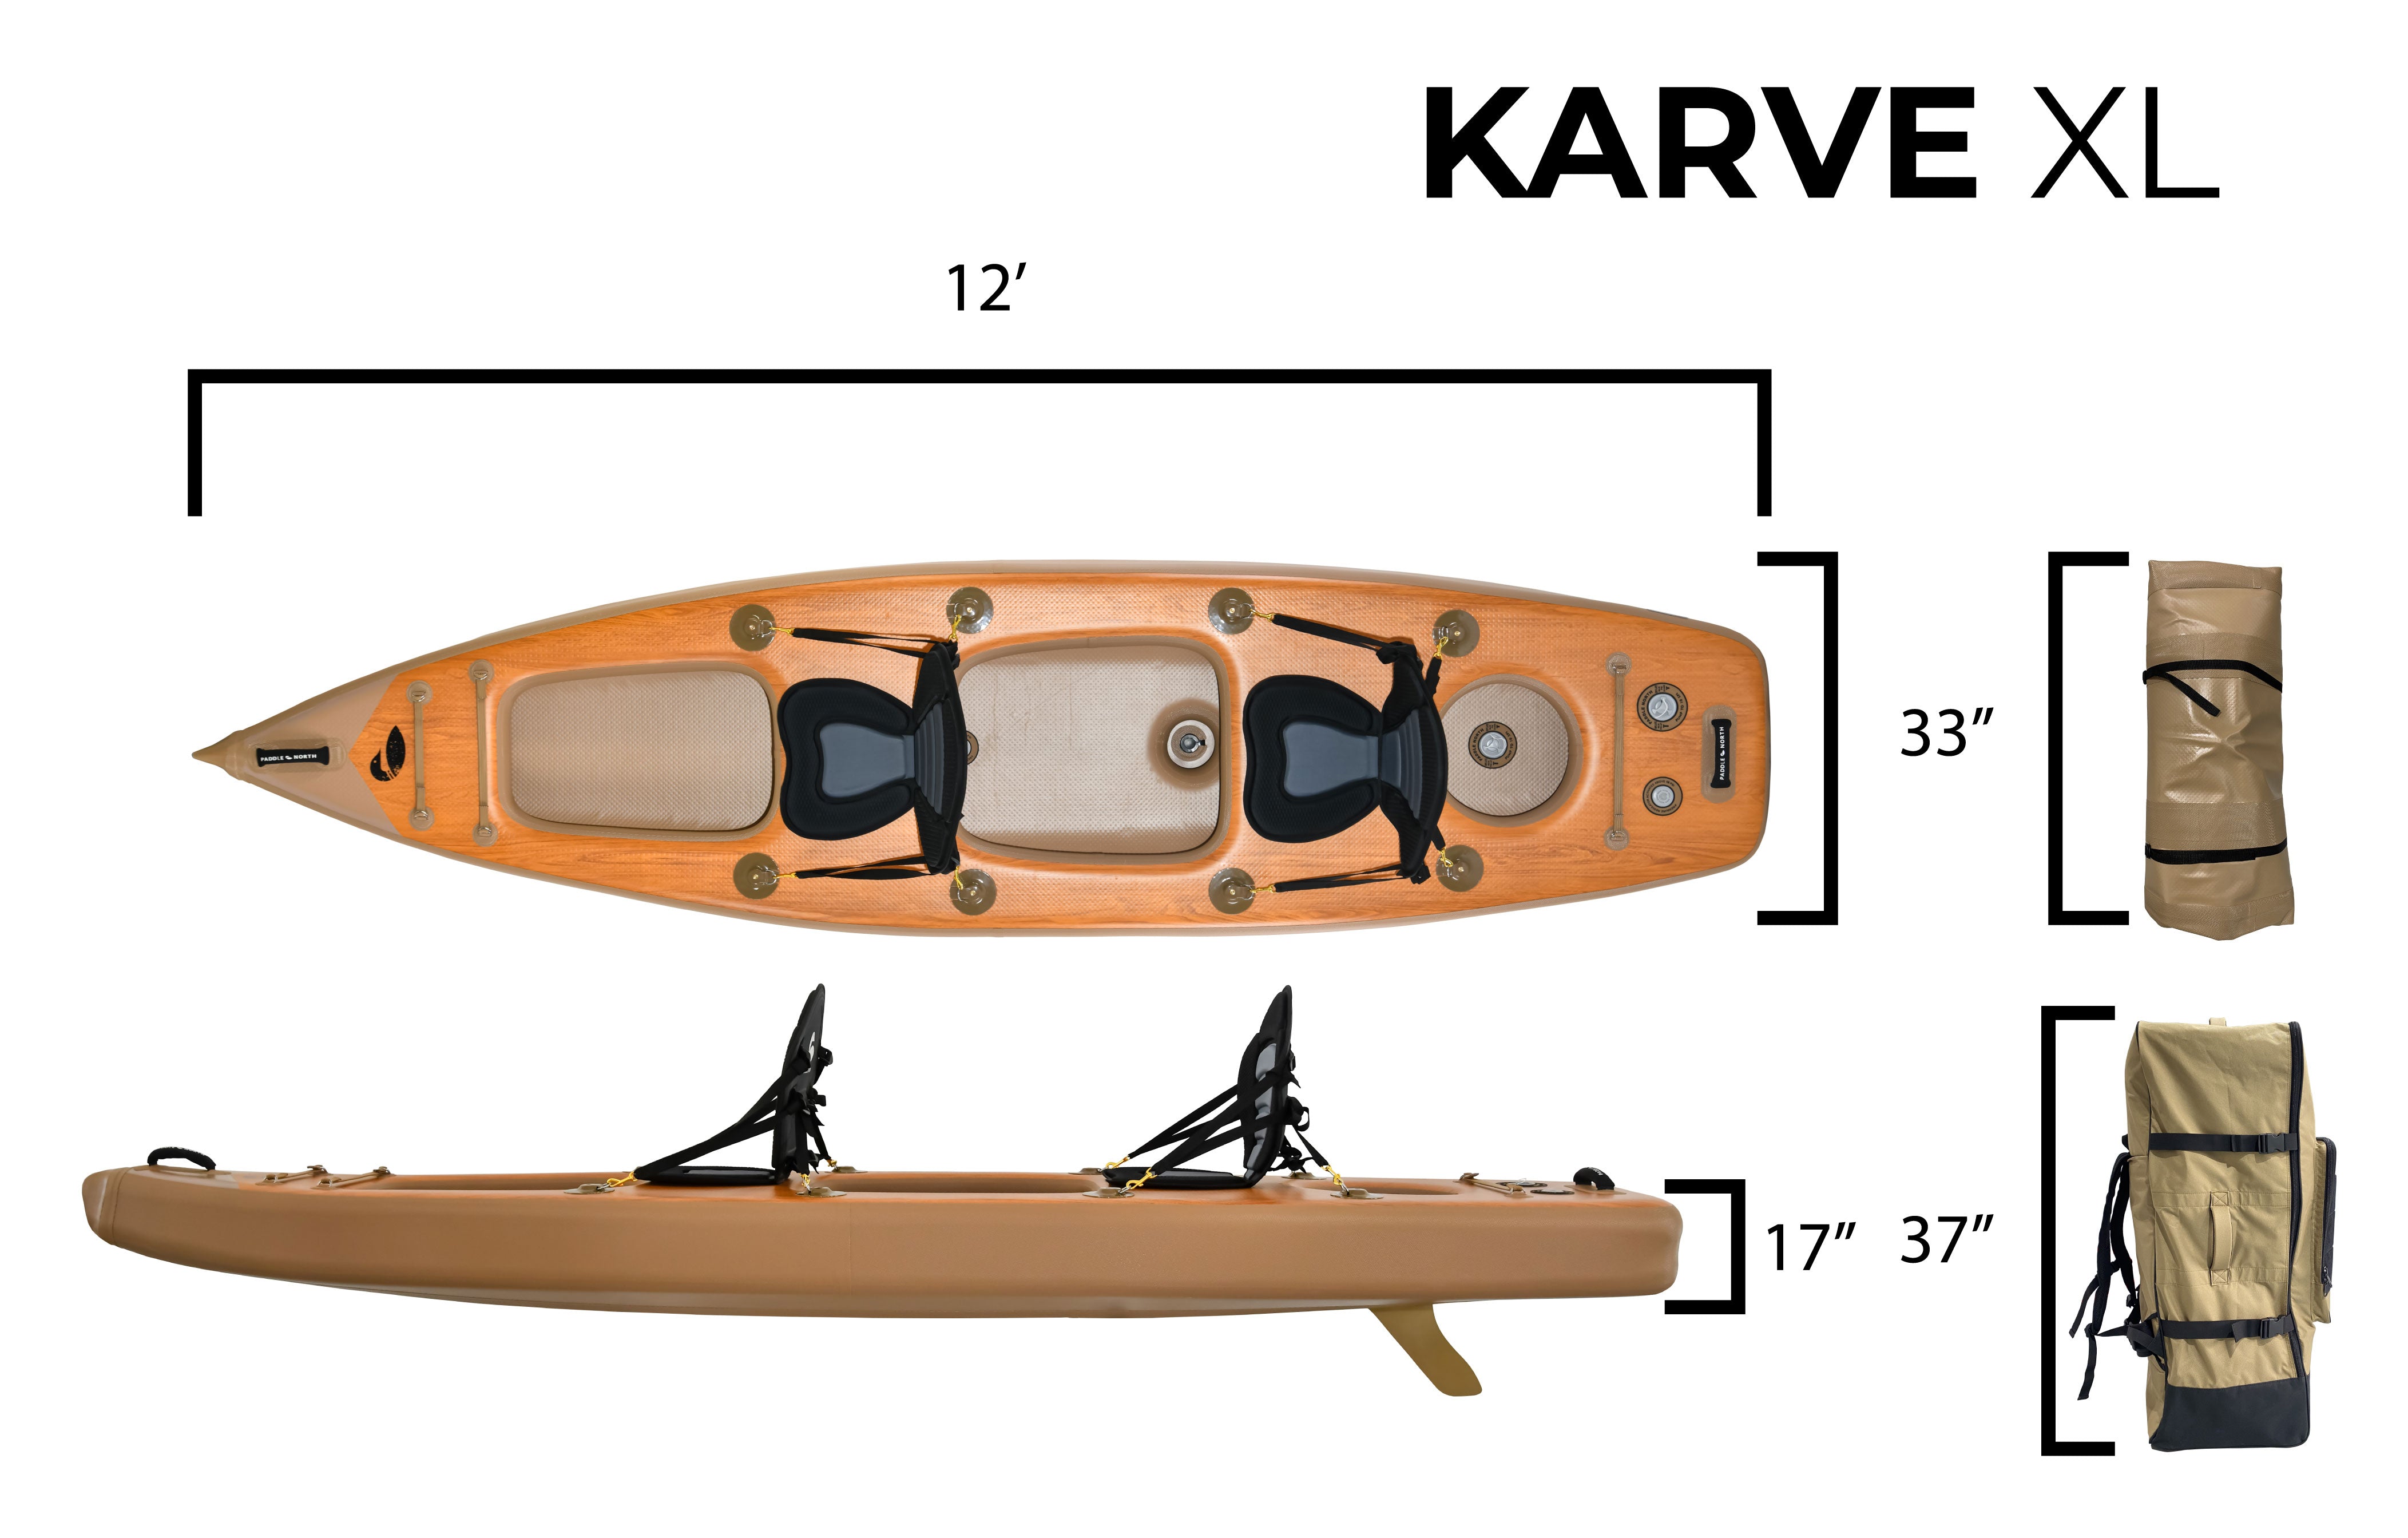 Karve XL inflatable tandem kayak specs, 12' long and 33" wide